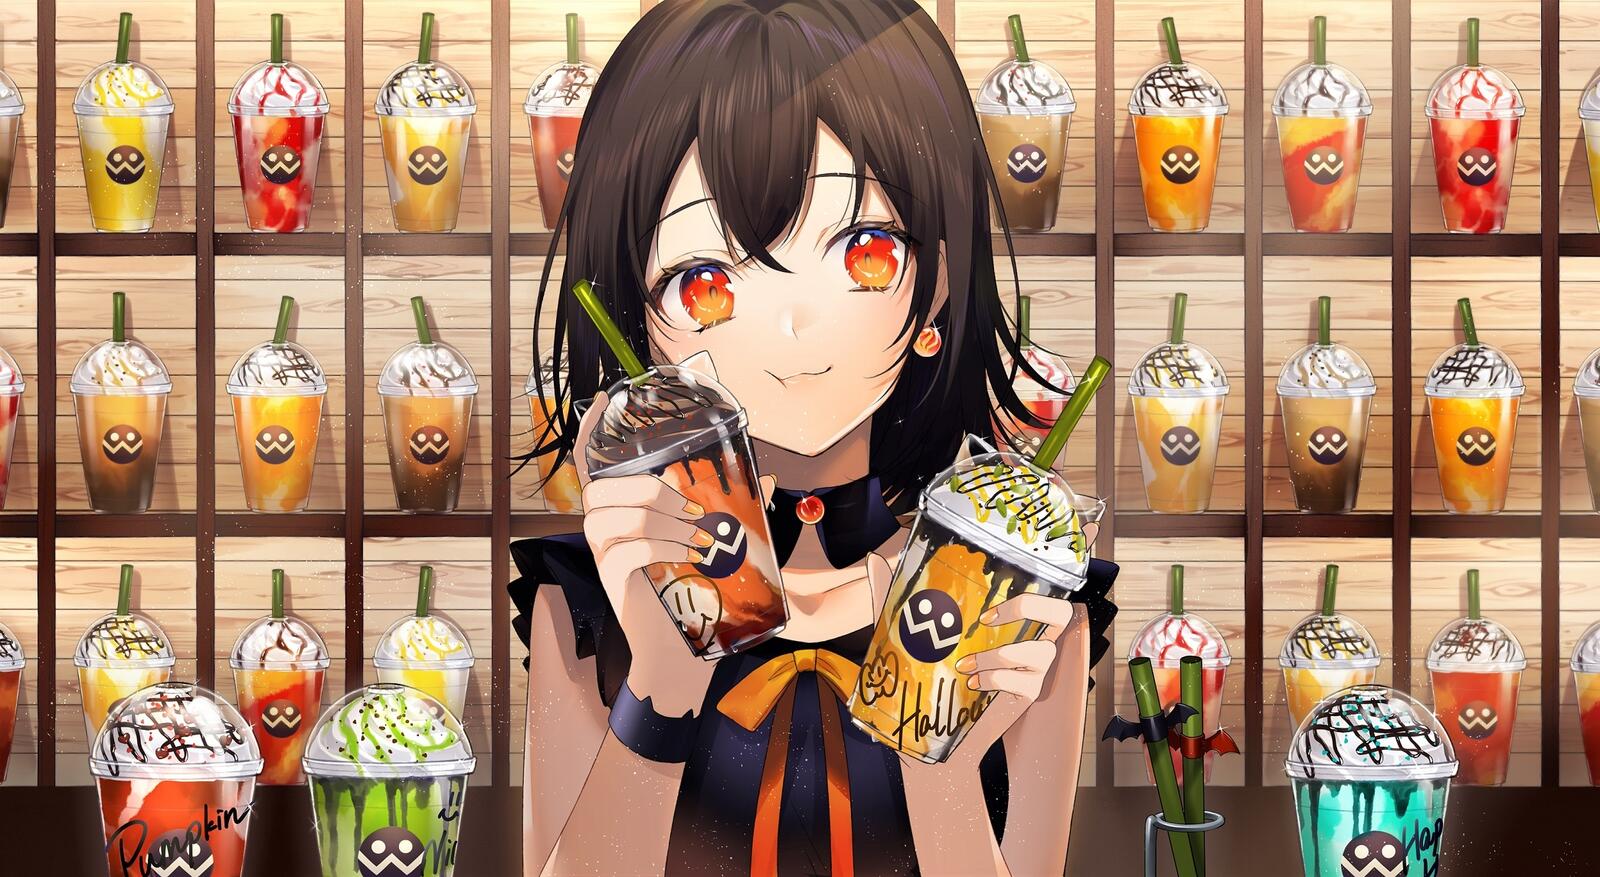 Wallpapers anime girl waitress coffee house on the desktop